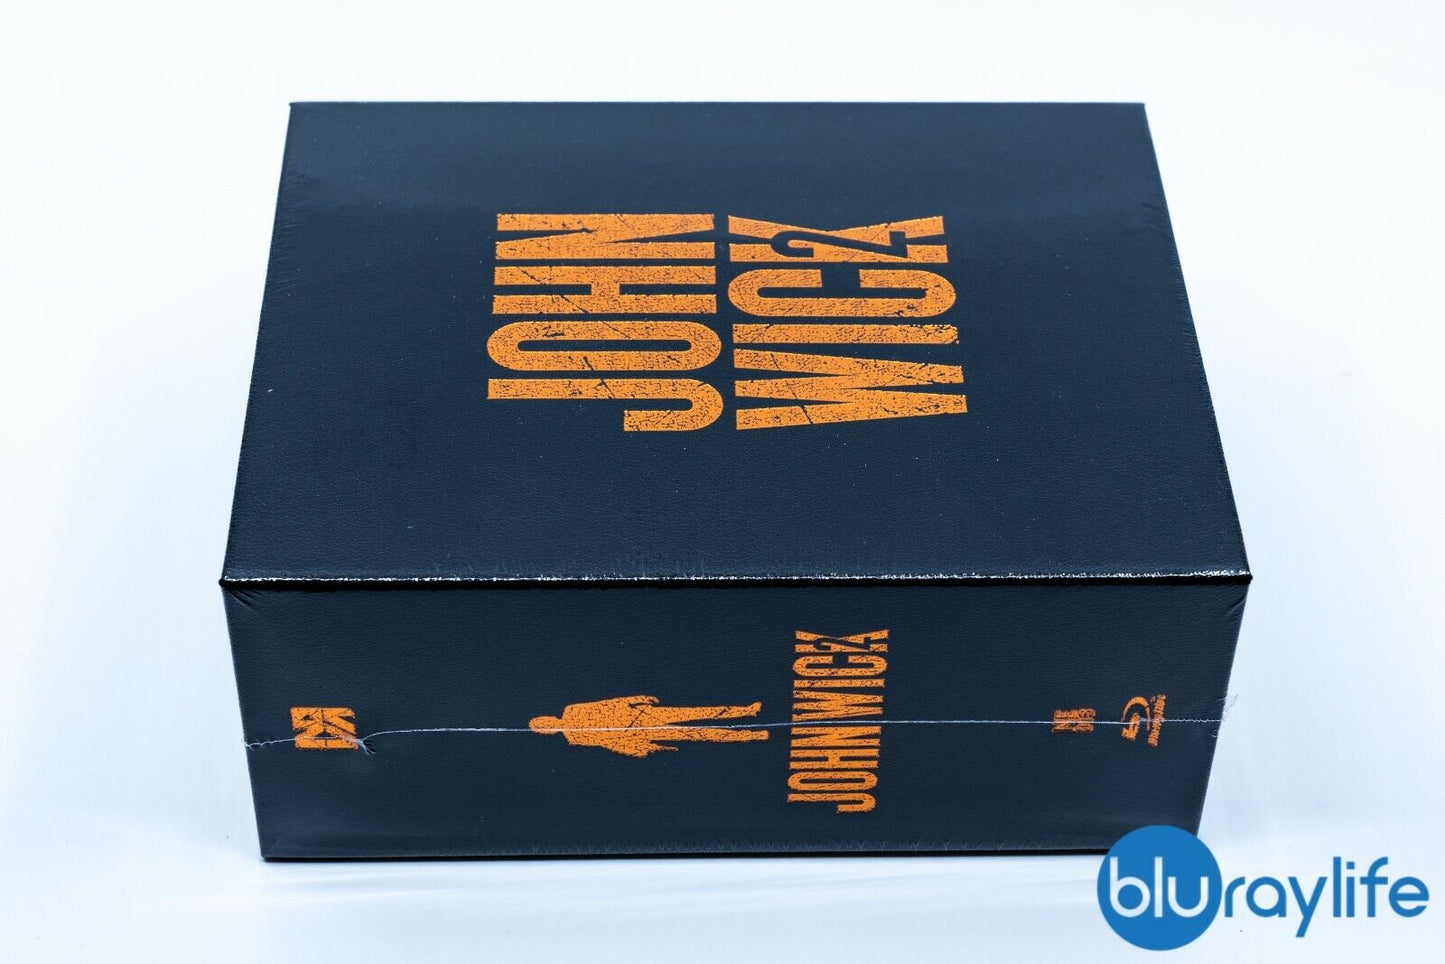 John Wick: Chapter 2 Blu-ray Steelbook Novamedia Exclusive #13 One Click Box Set